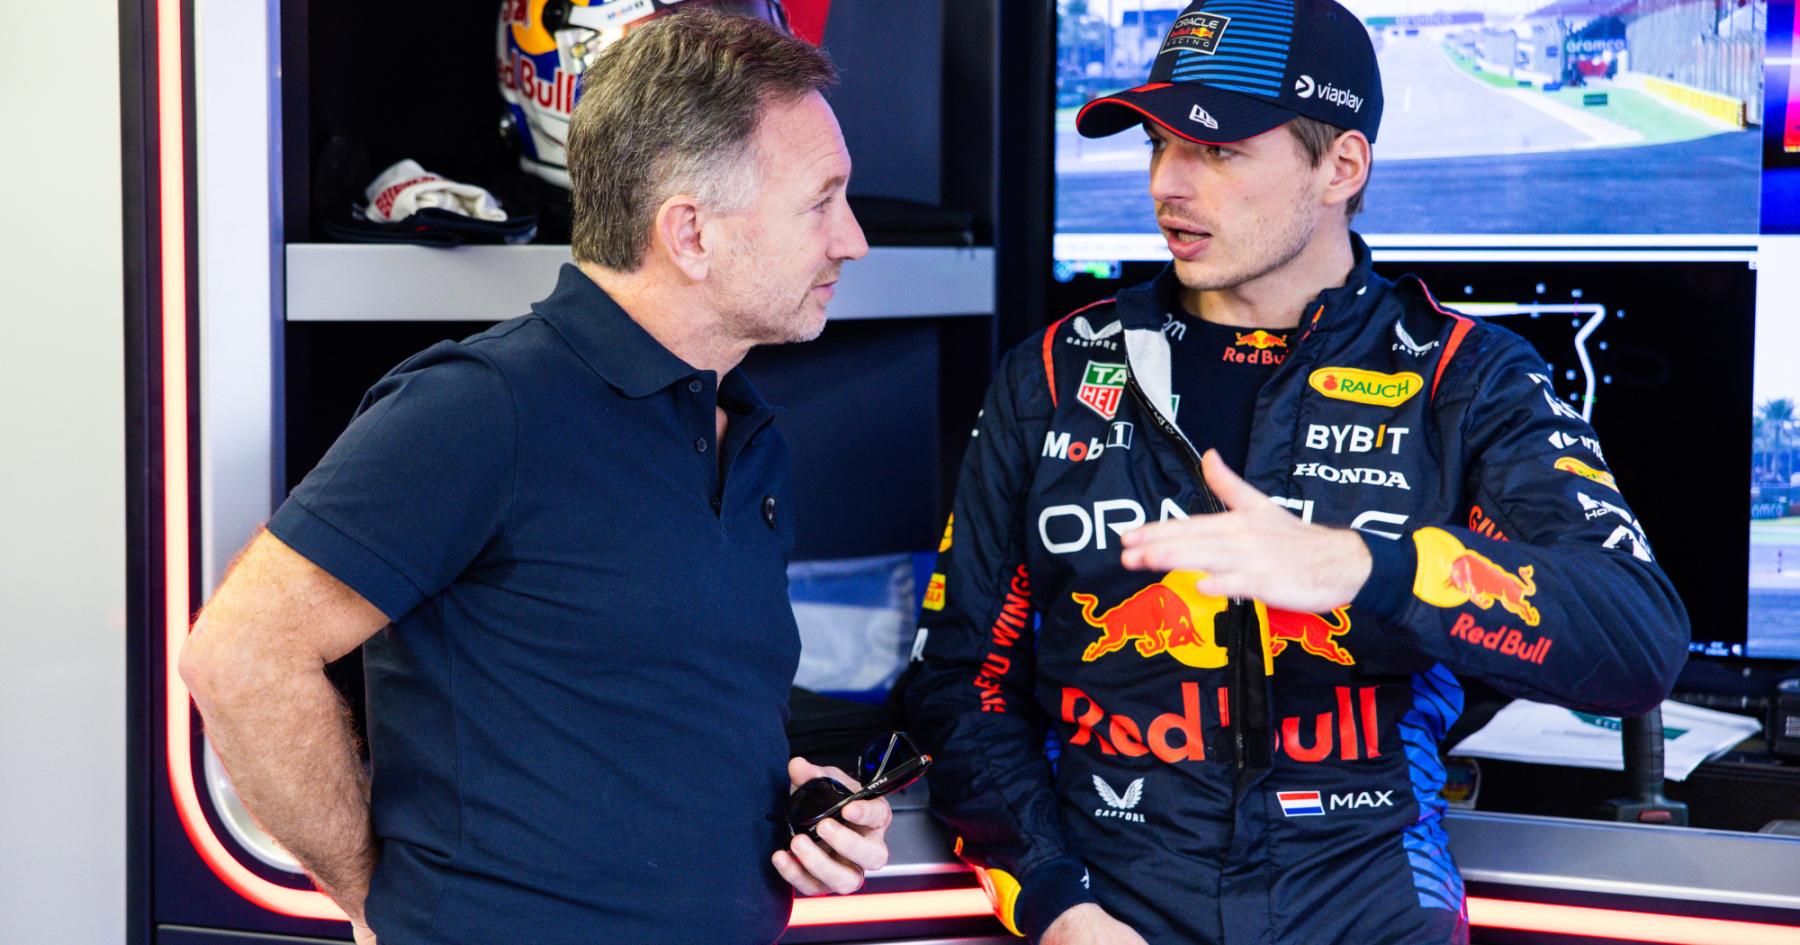 Red Bull Civil War: Will Verstappen Make the Move to Mercedes?